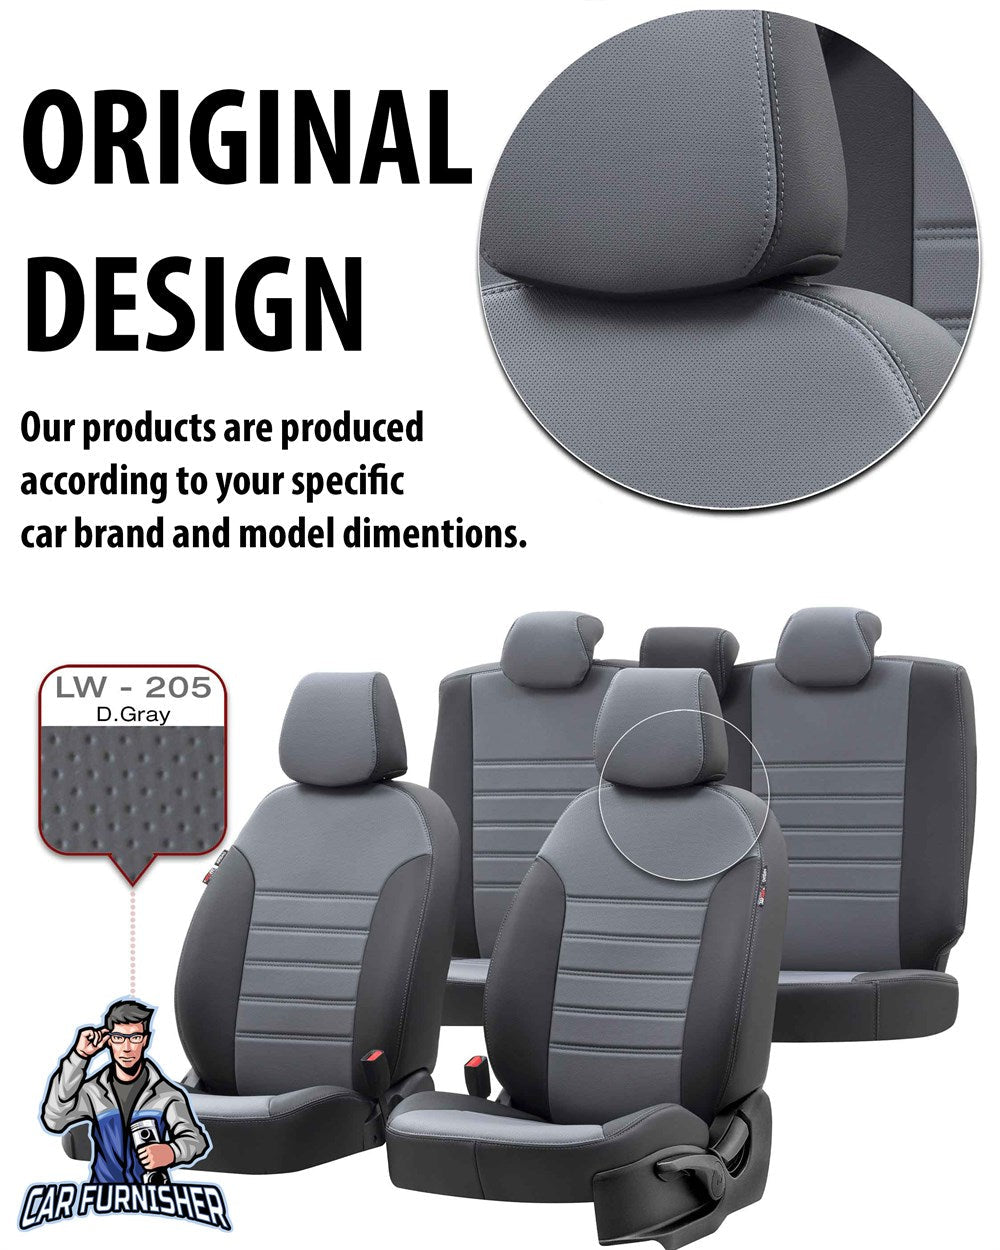 Hyundai Elantra Seat Covers Istanbul Leather Design Smoked Black Leather